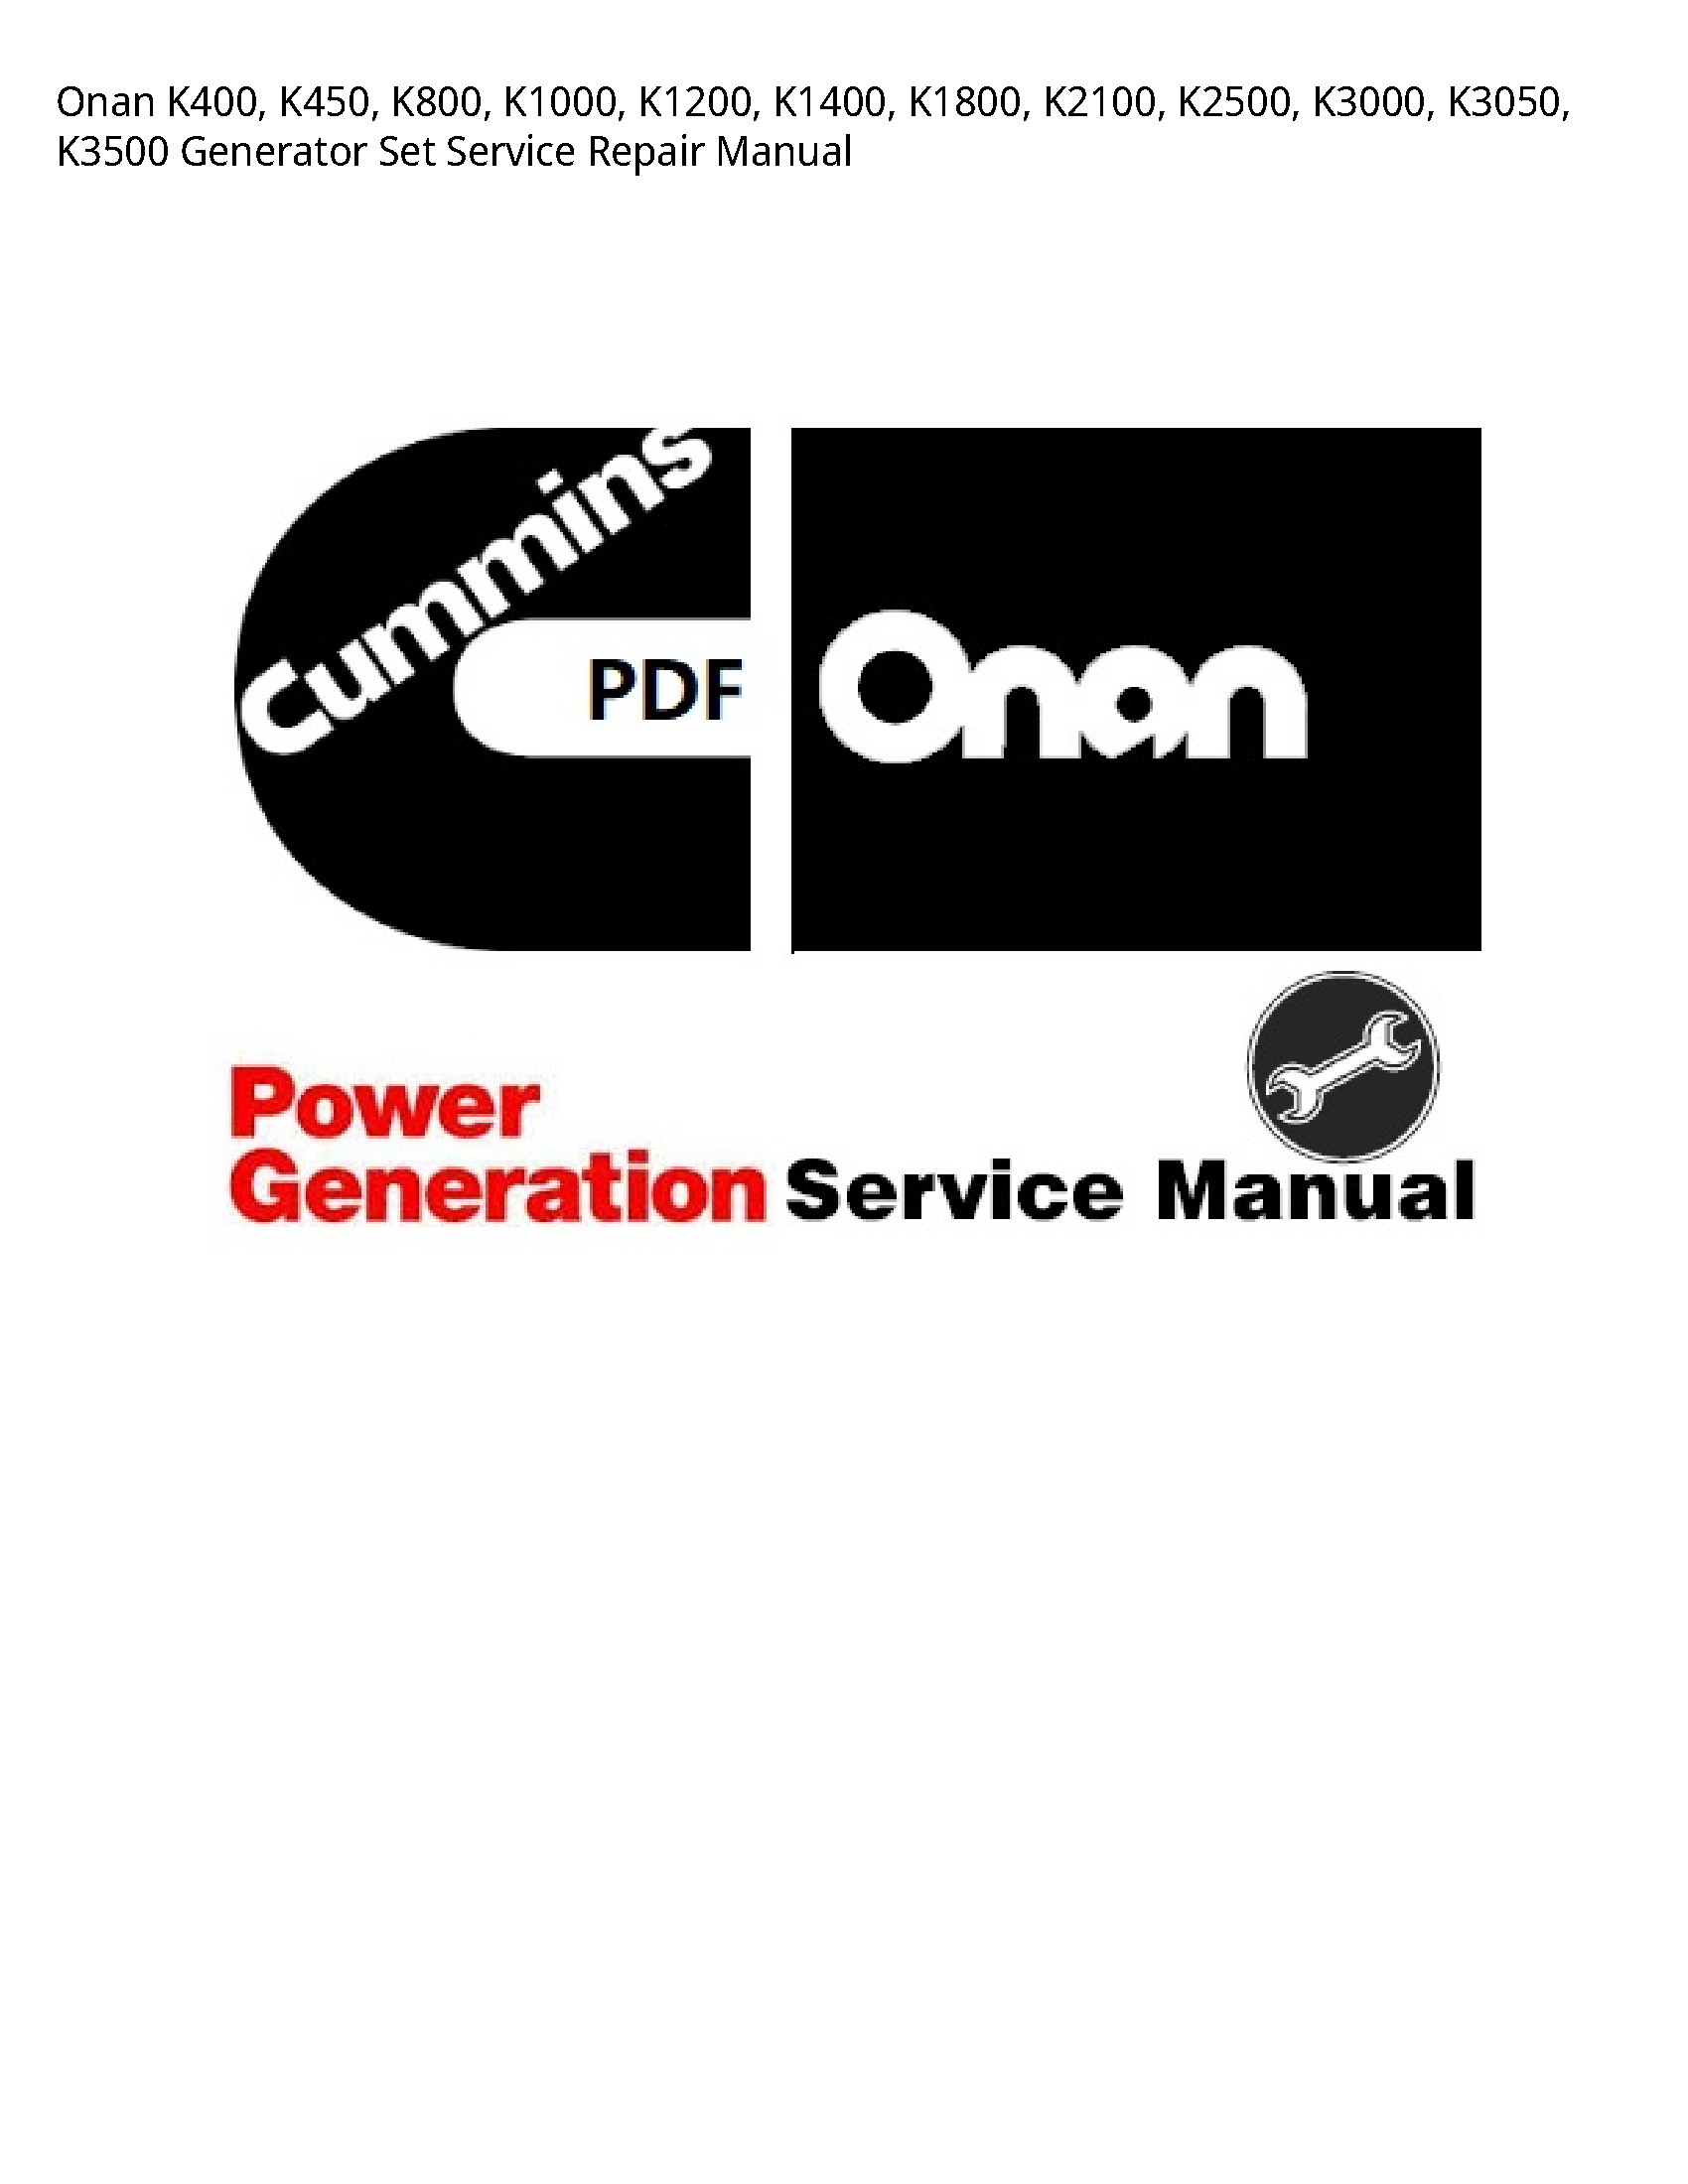 Onan K400 Generator Set manual